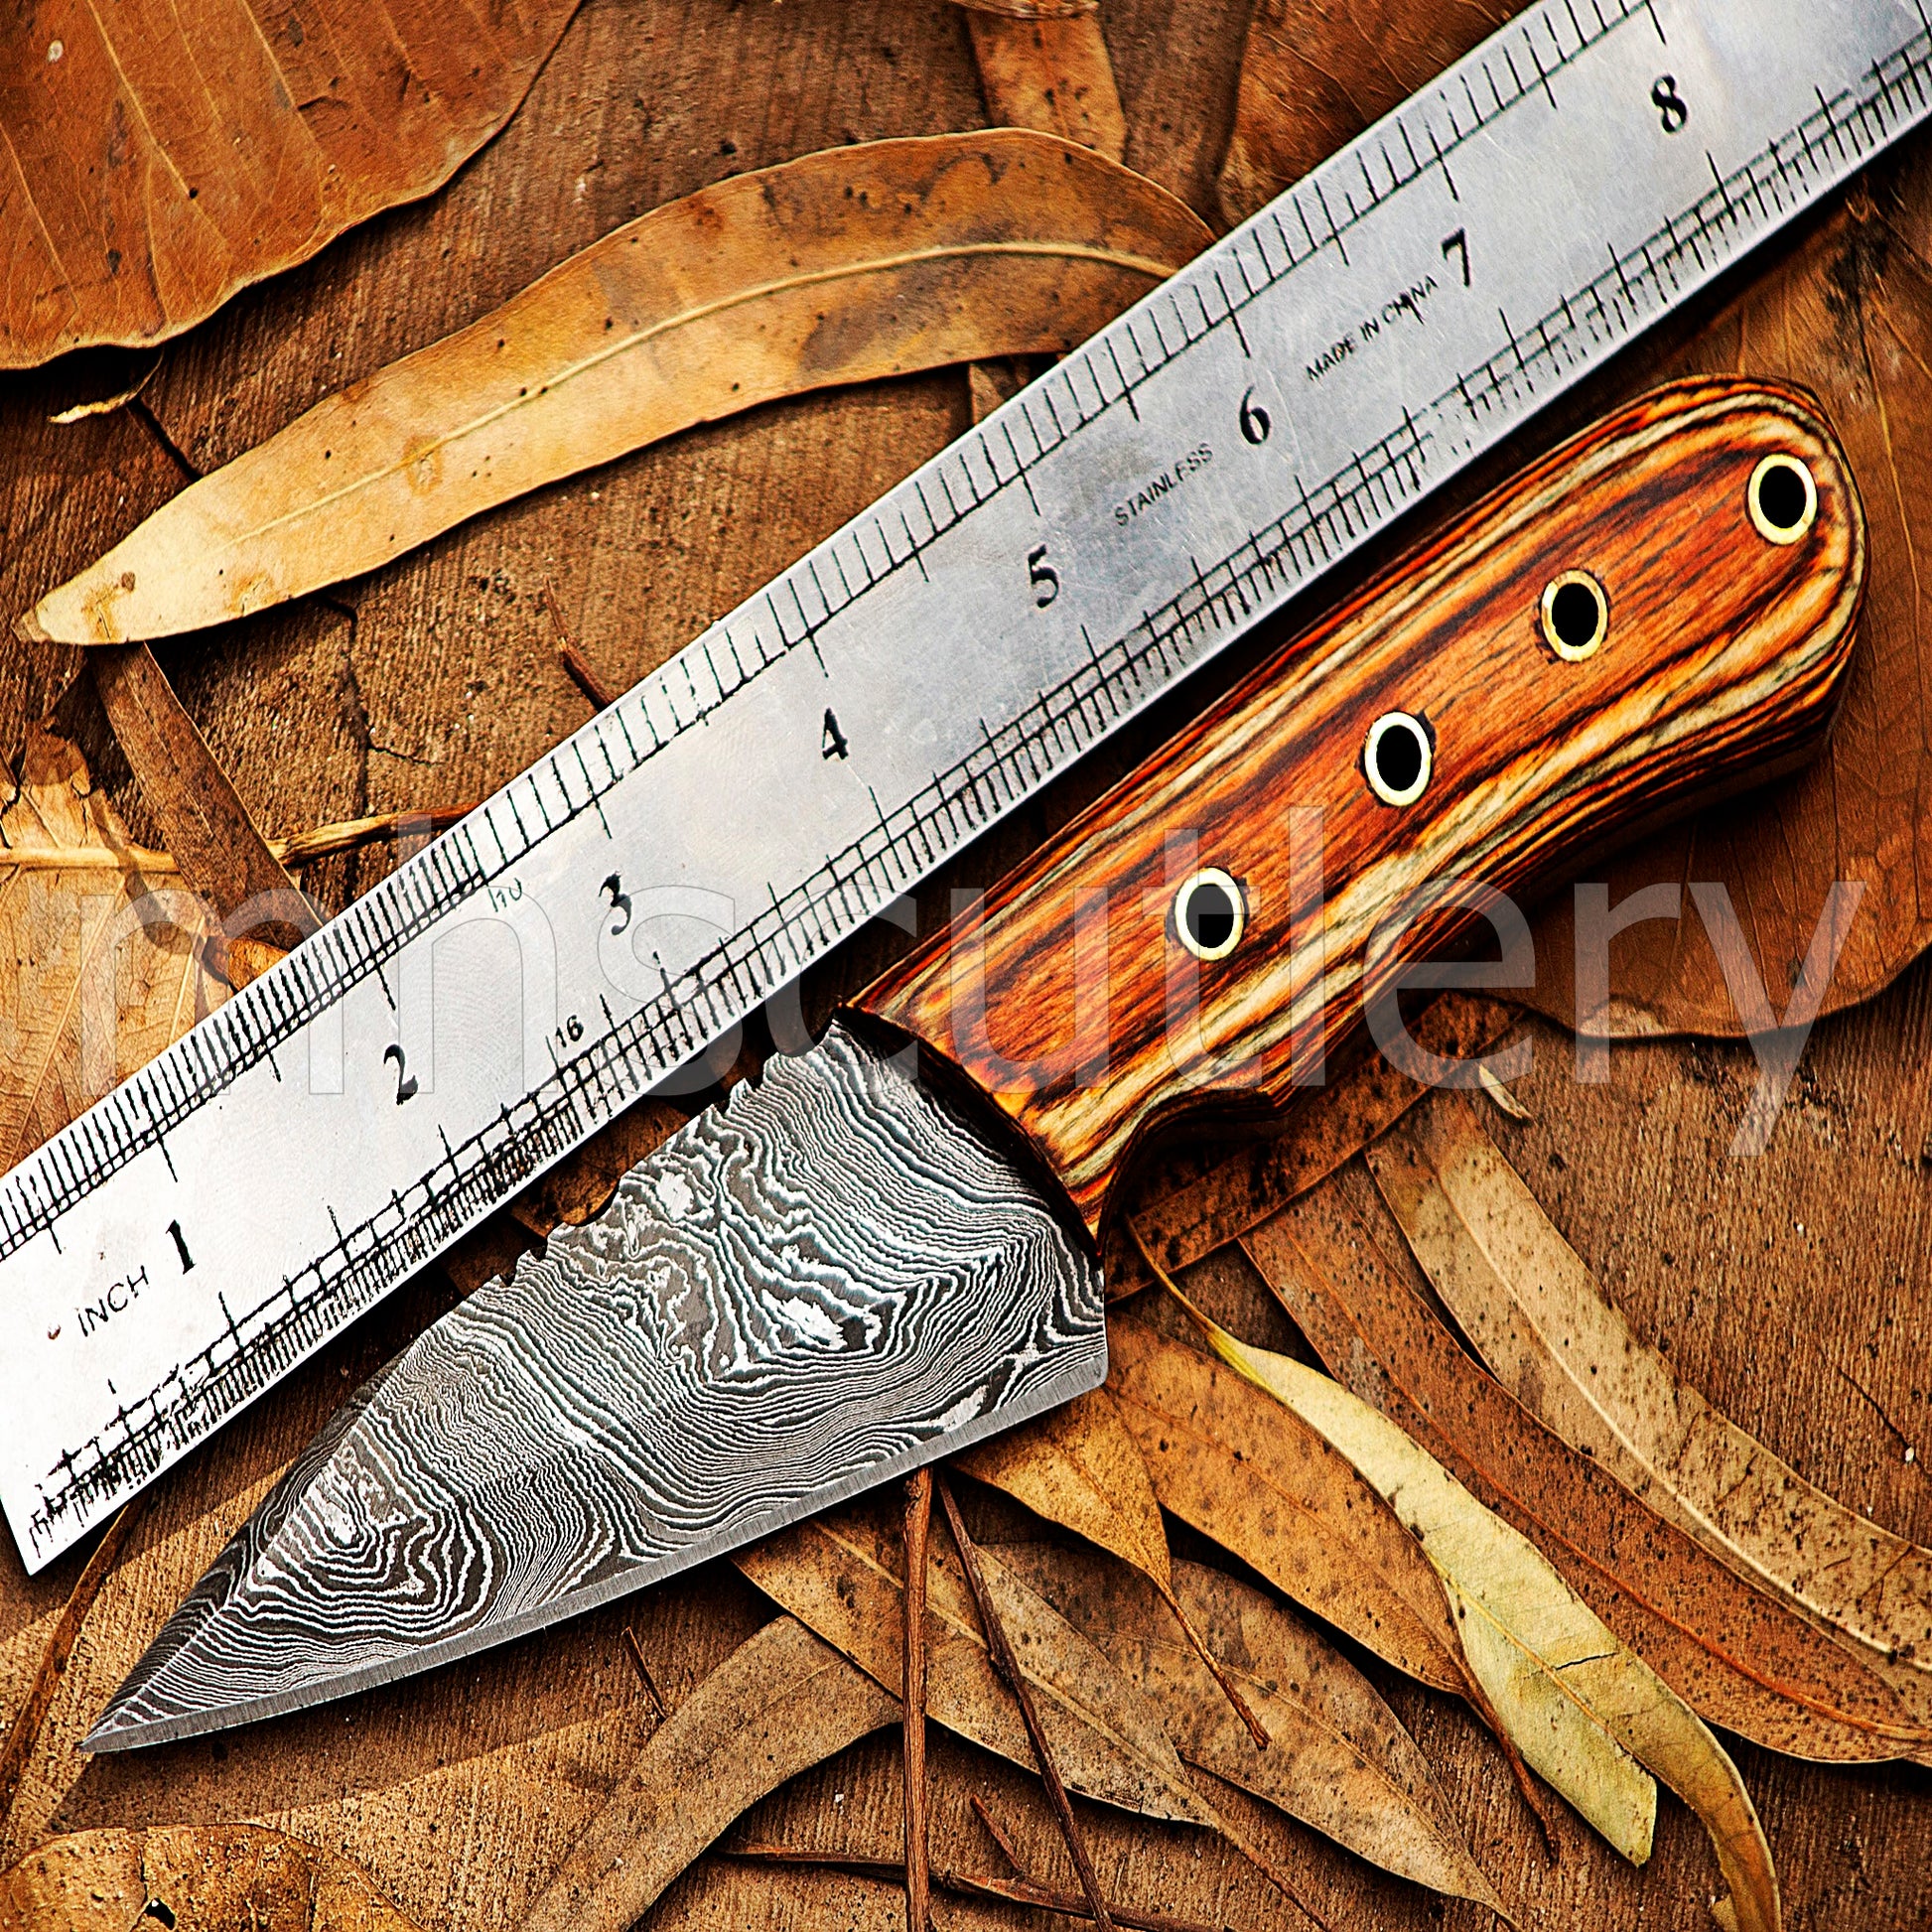 Handmade Damascus Steel Tactical Hunting Skinner Knife | mhscutlery